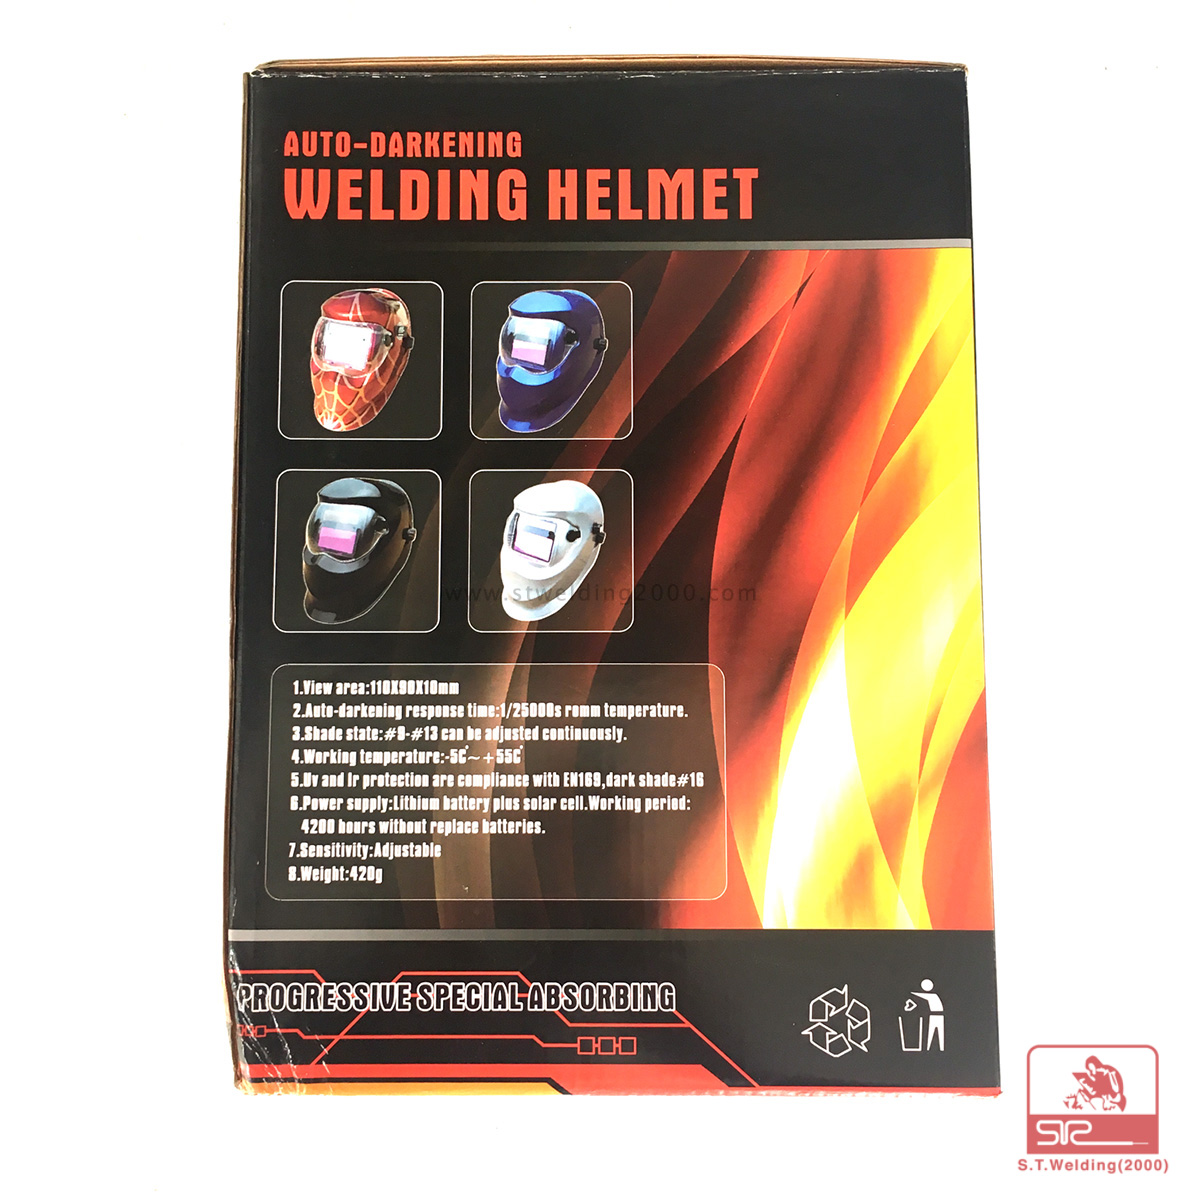 Tiger auto darkening welding helmet